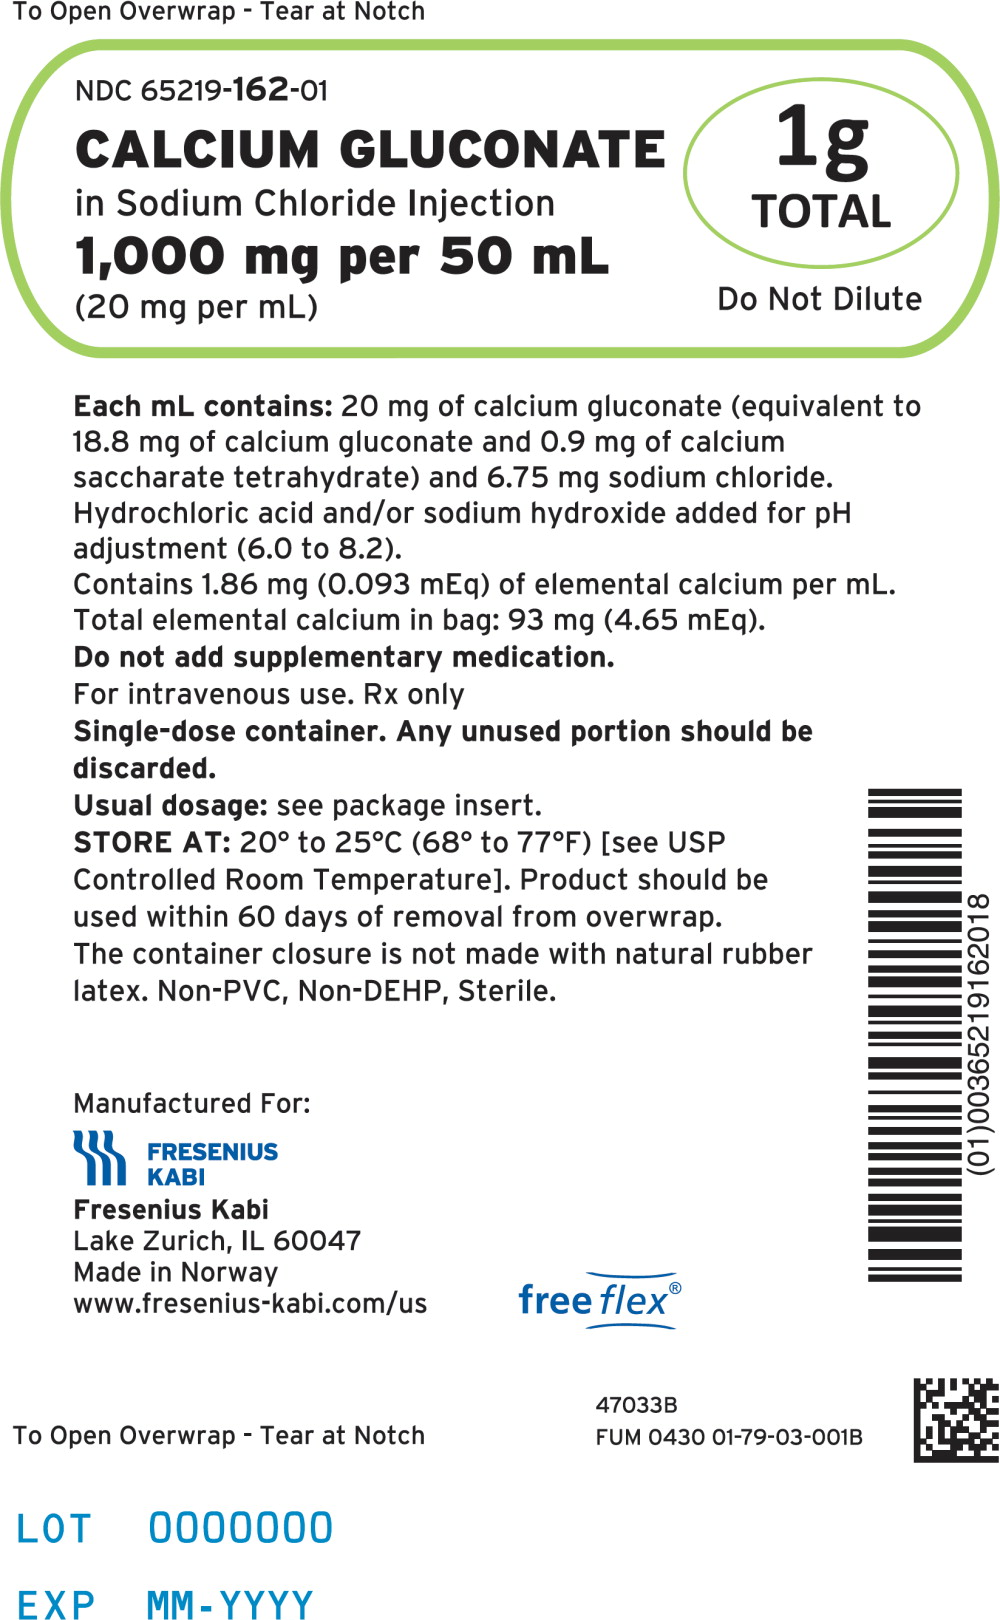 PACKAGE LABEL - PRINCIPAL DISPLAY – Calcium Gluconate 1 g Overwrap Label
